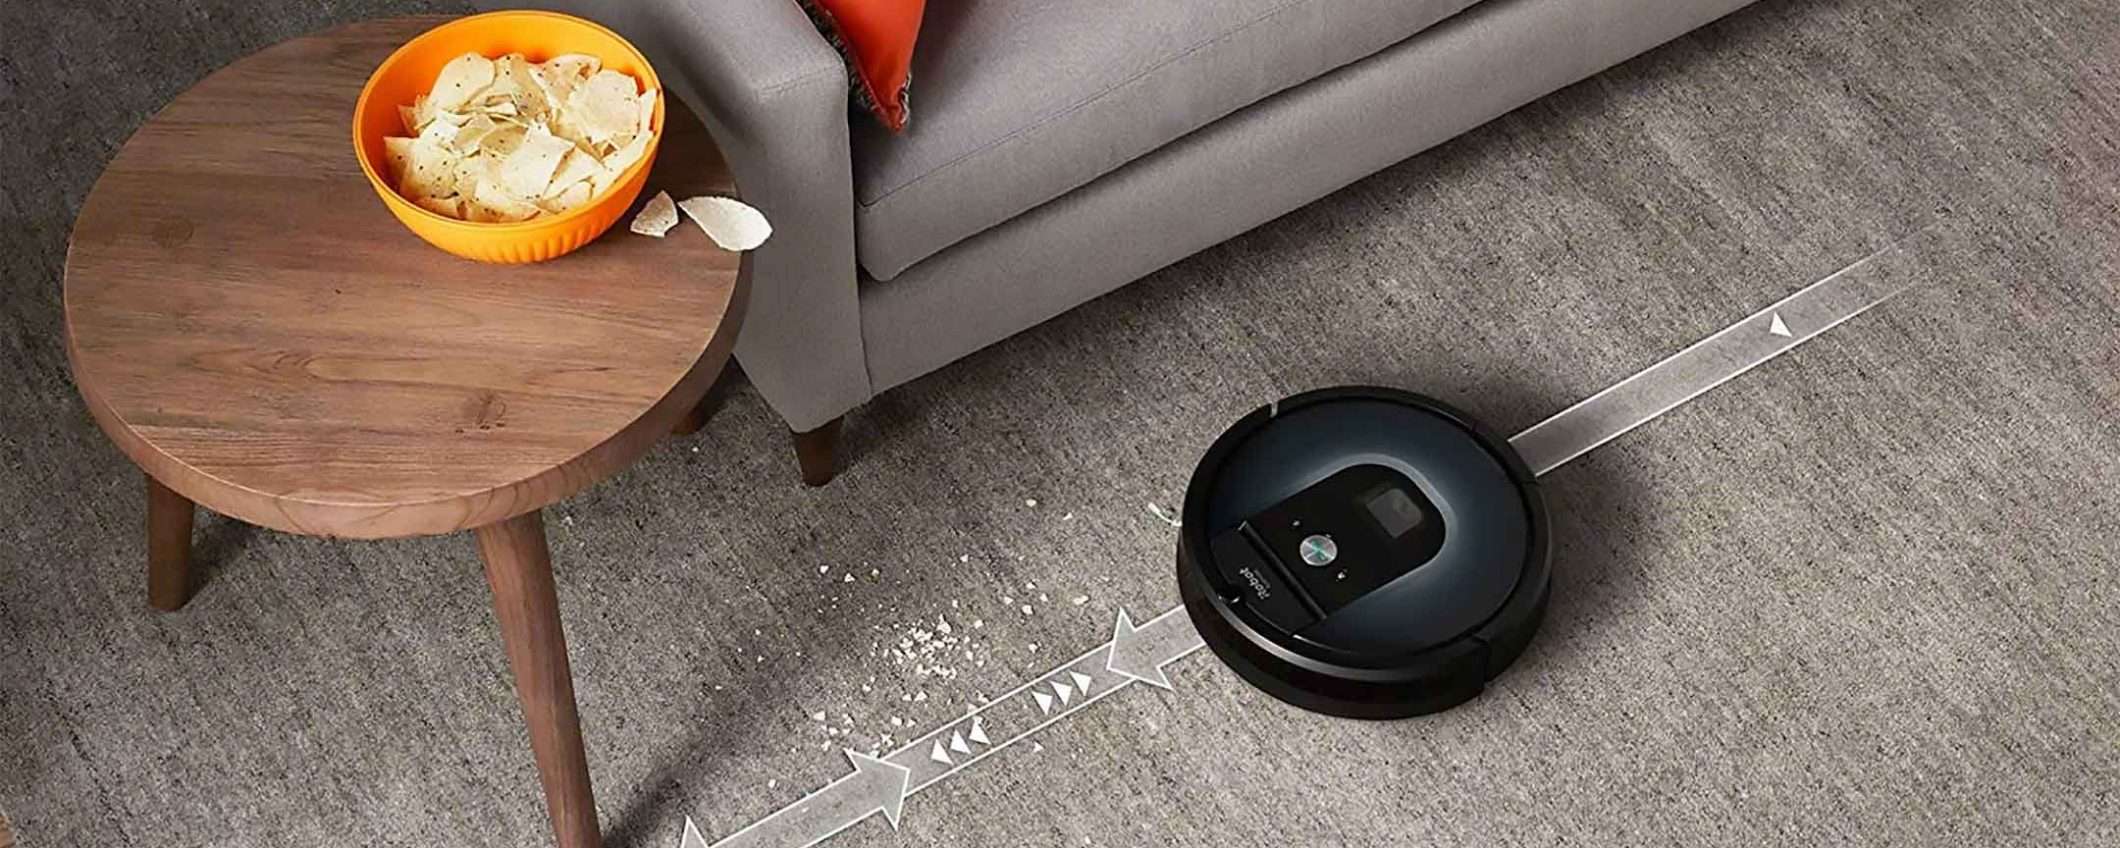 iRobot Roomba 960 in offerta per Natale su Amazon